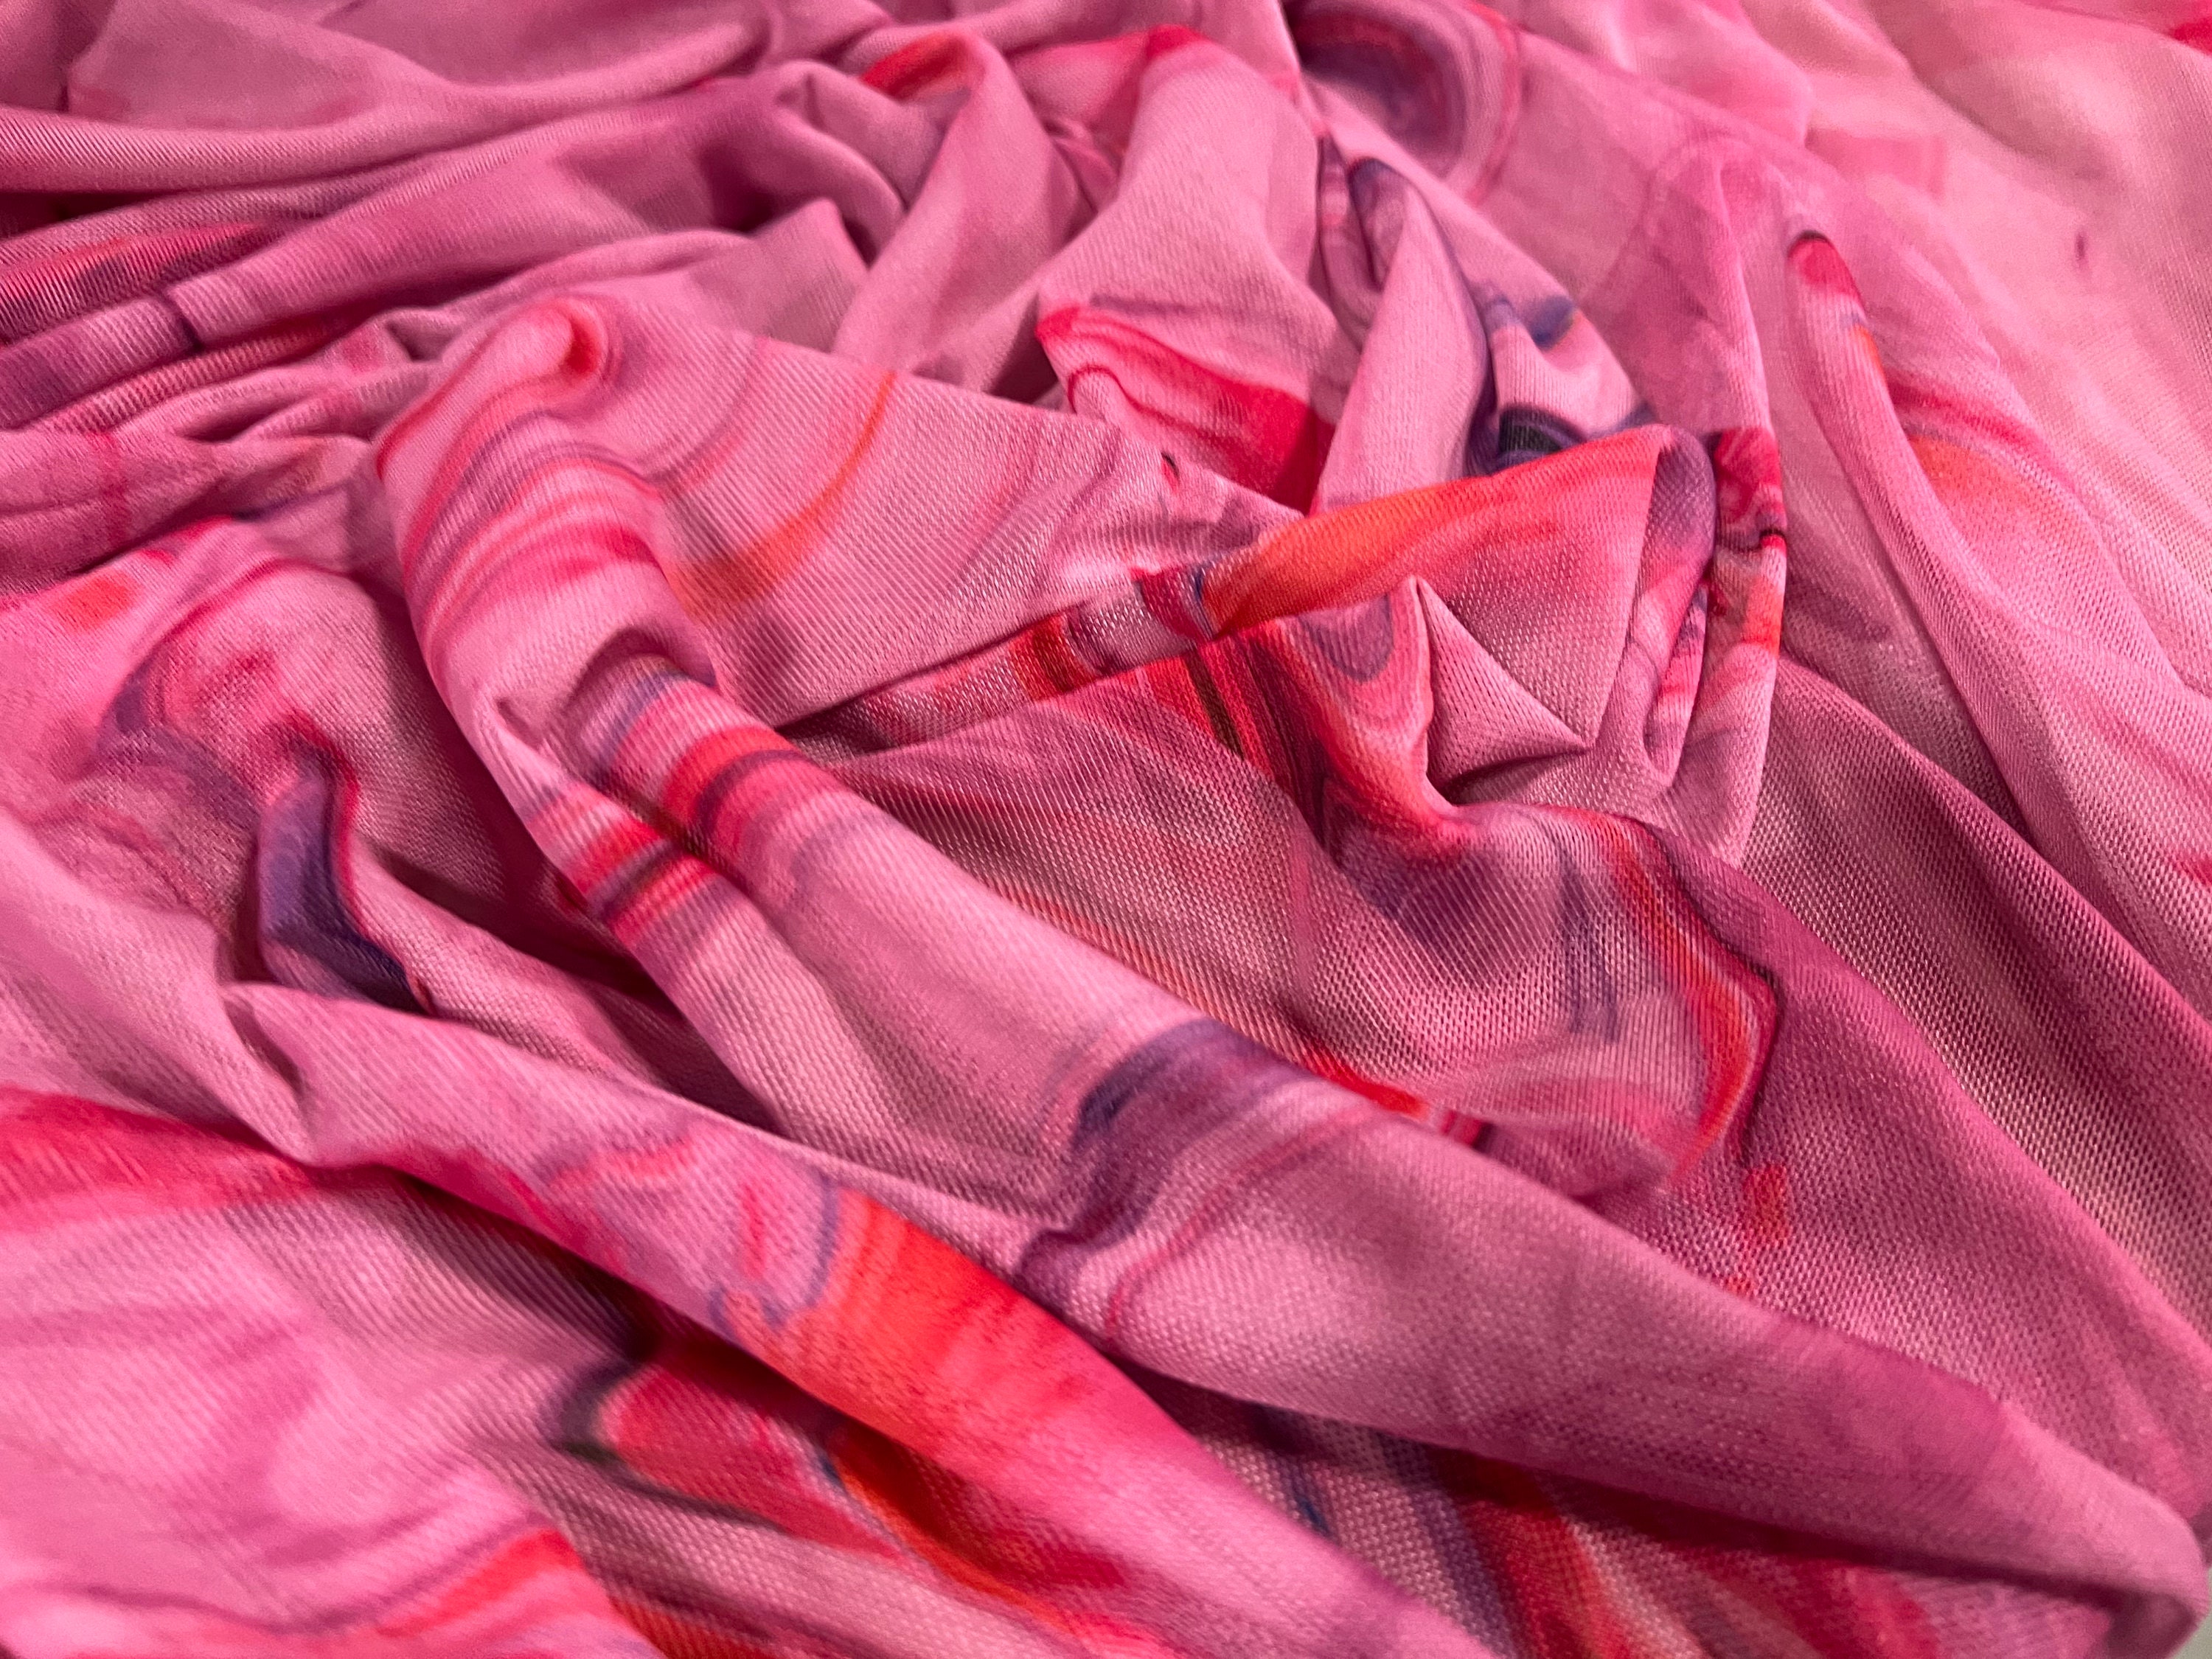 Power mesh net stretch fabric pink & gold per metre swirl print